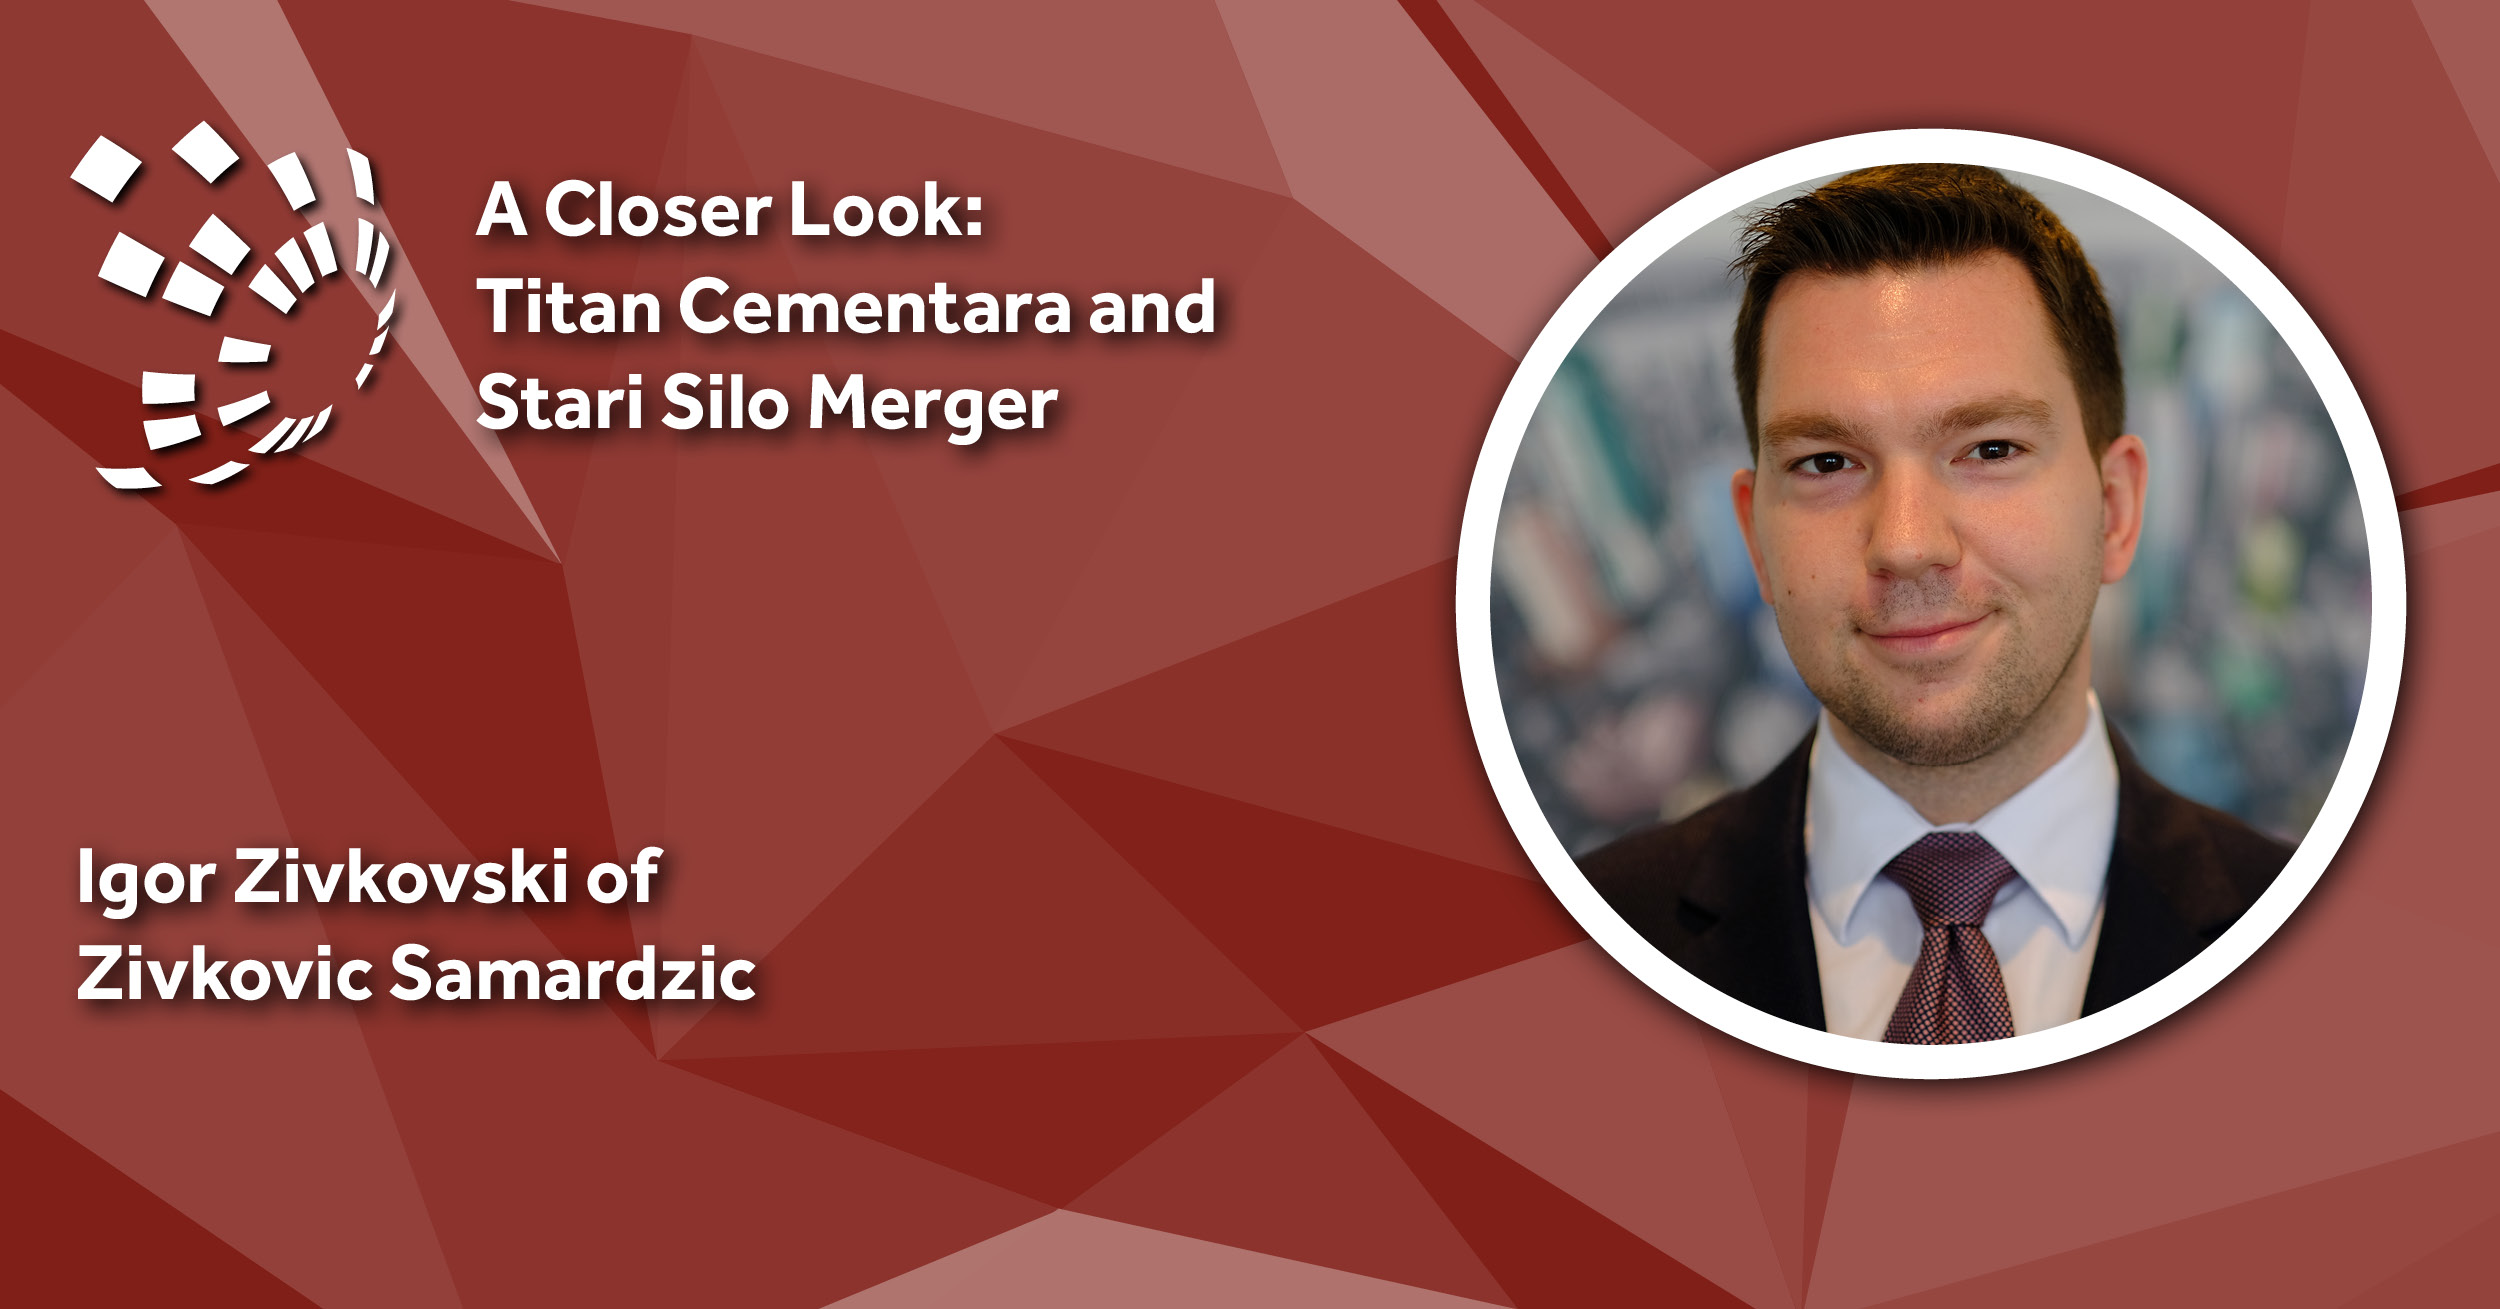 A Closer Look: Zivkovic Samardzic’s Igor Zivkovski on Titan Cementara and Stari Silo Merger